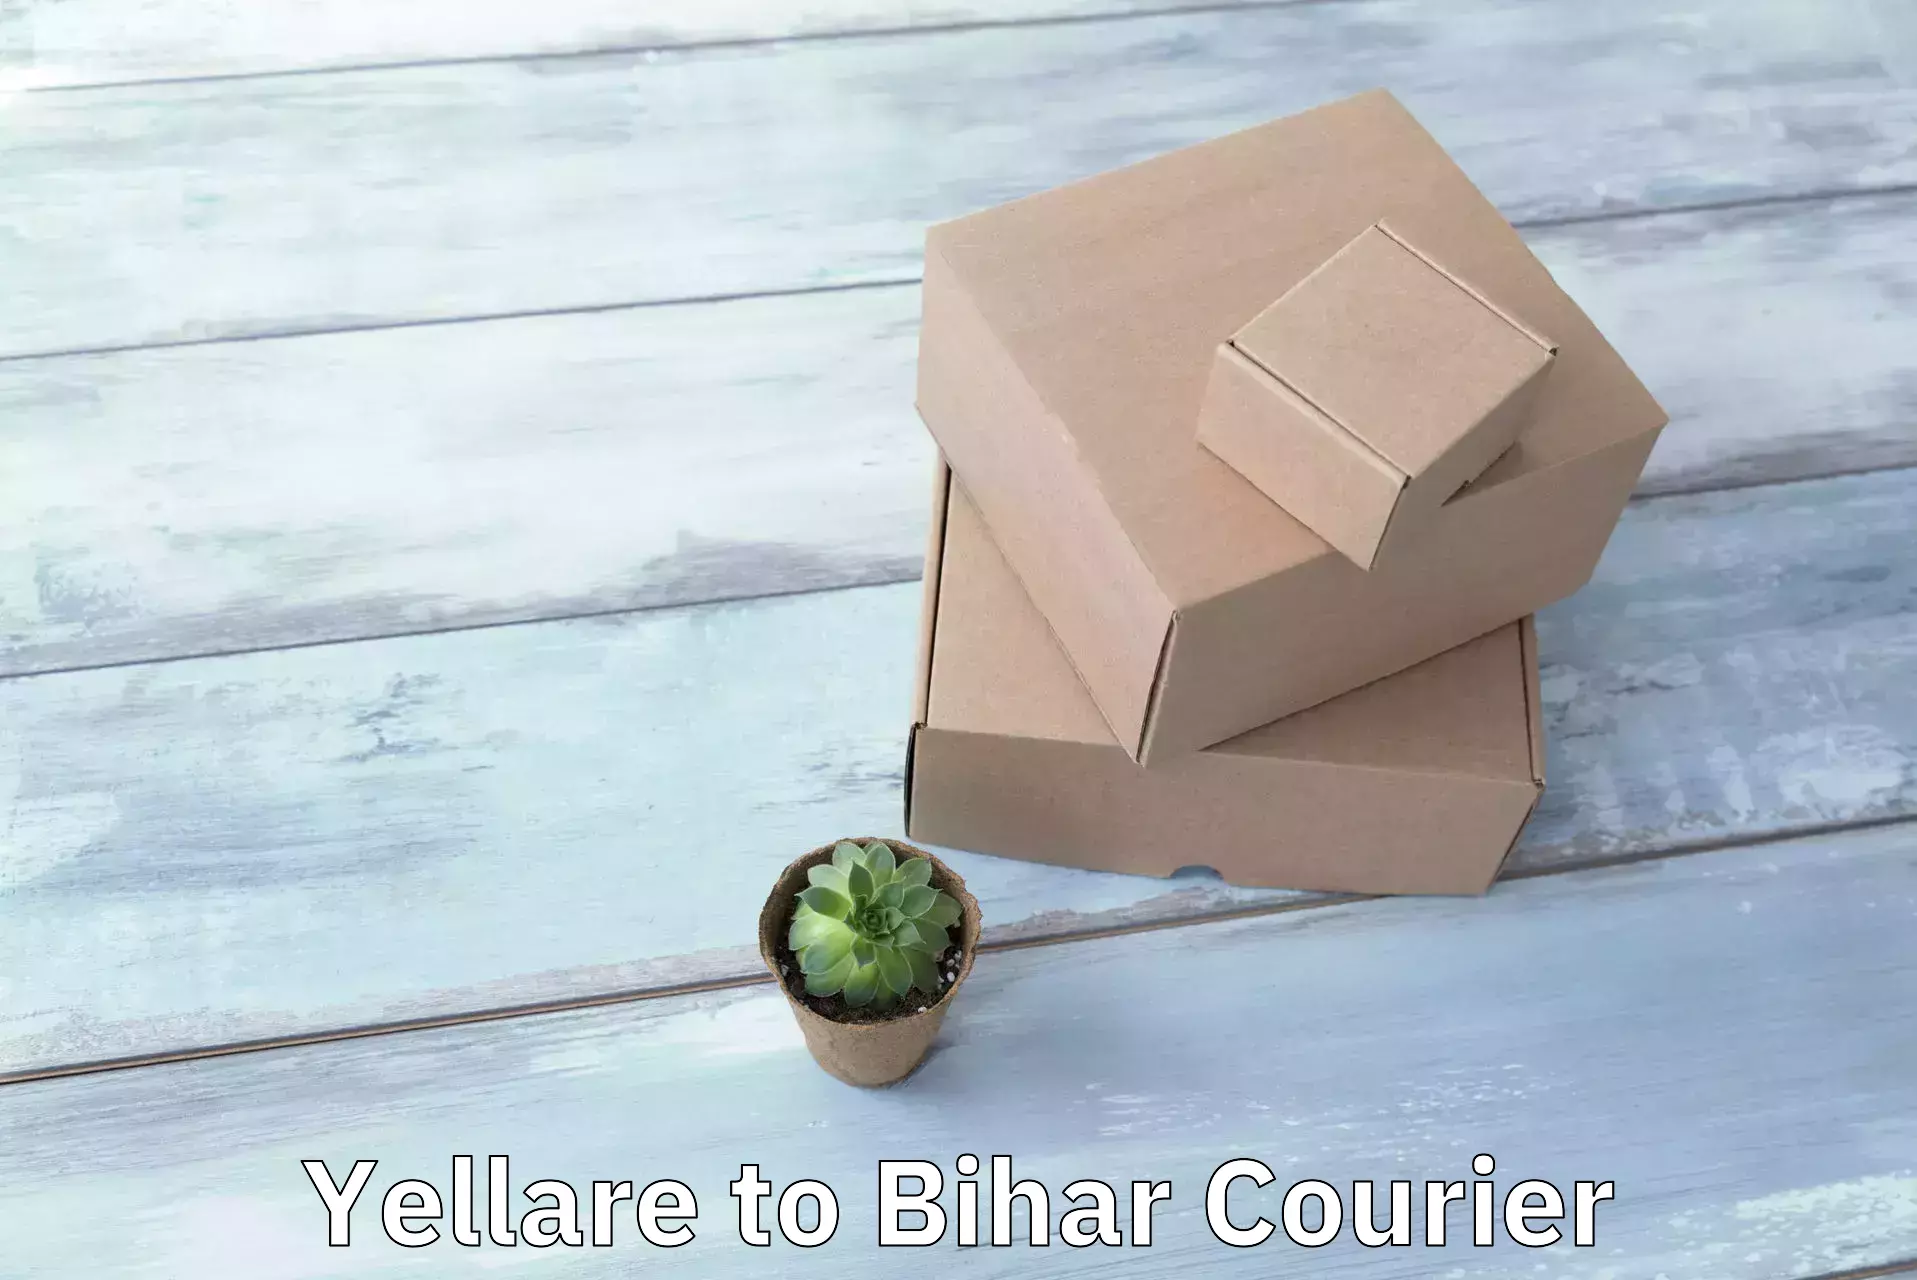 Quick dispatch service Yellare to Bihar